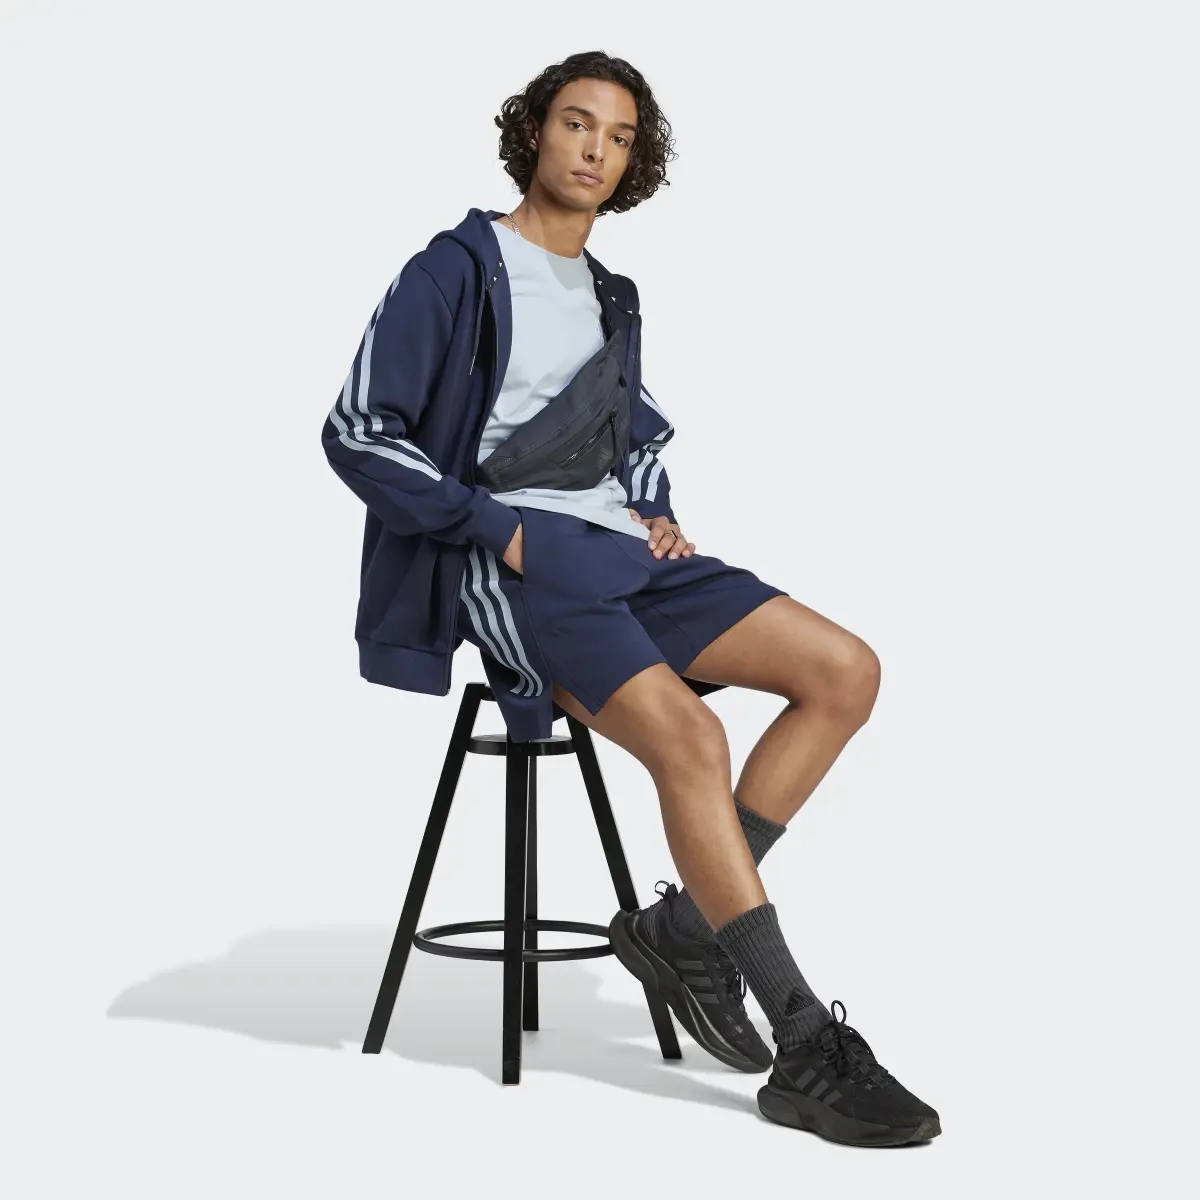 Adidas Future Icons 3-Stripes Shorts. 3